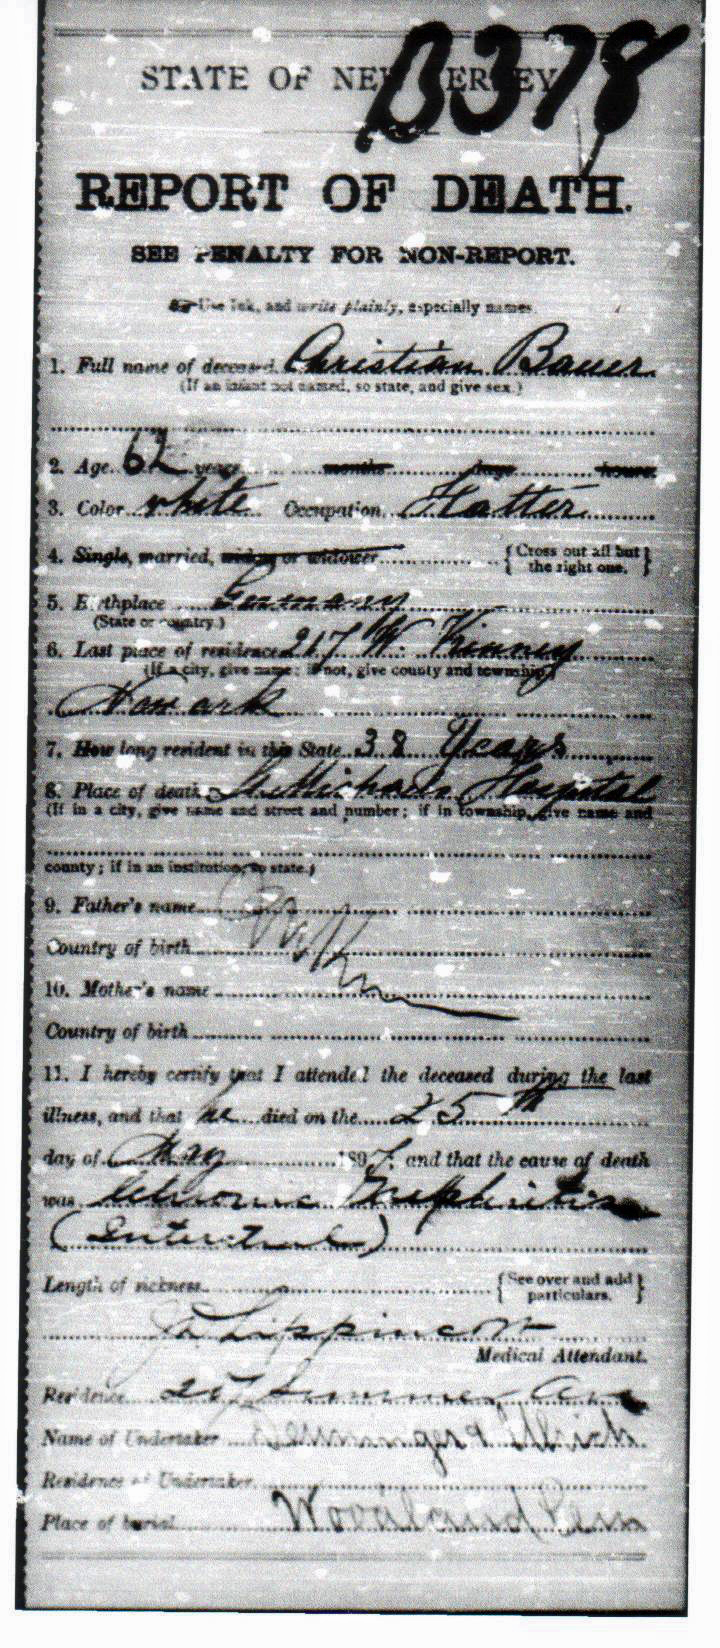 Christian Bauer Death Certificate